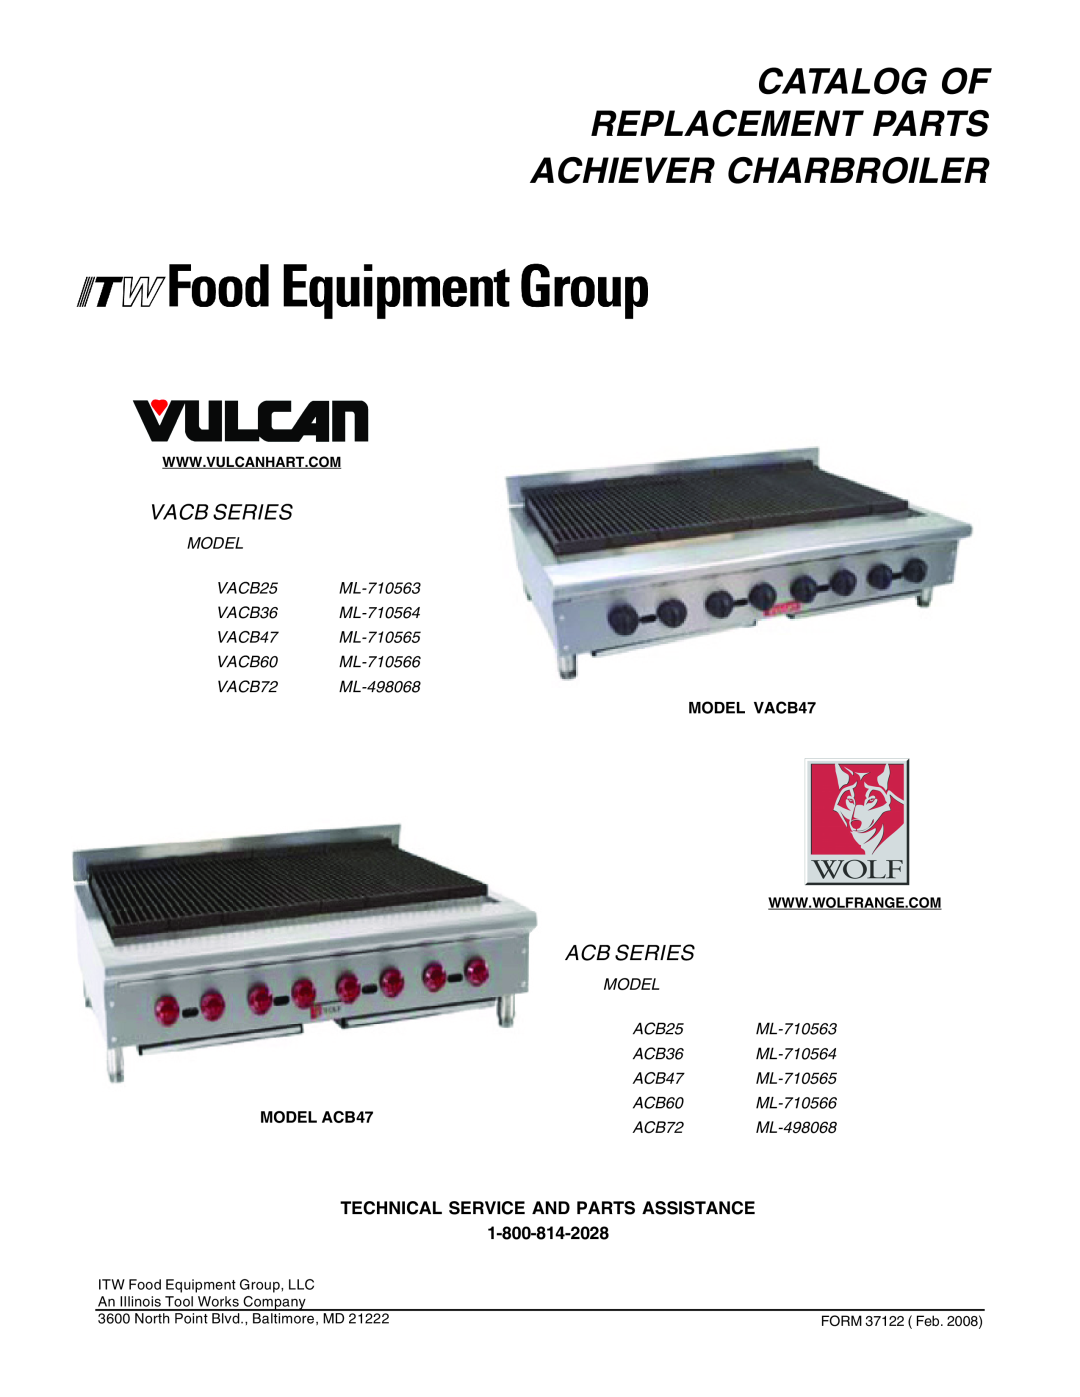 Vulcan-Hart ACB SERIES manual Catalog Of Replacement Parts Achiever Charbroiler, Vacb Series, Acb Series, VACB72 ML-498068 